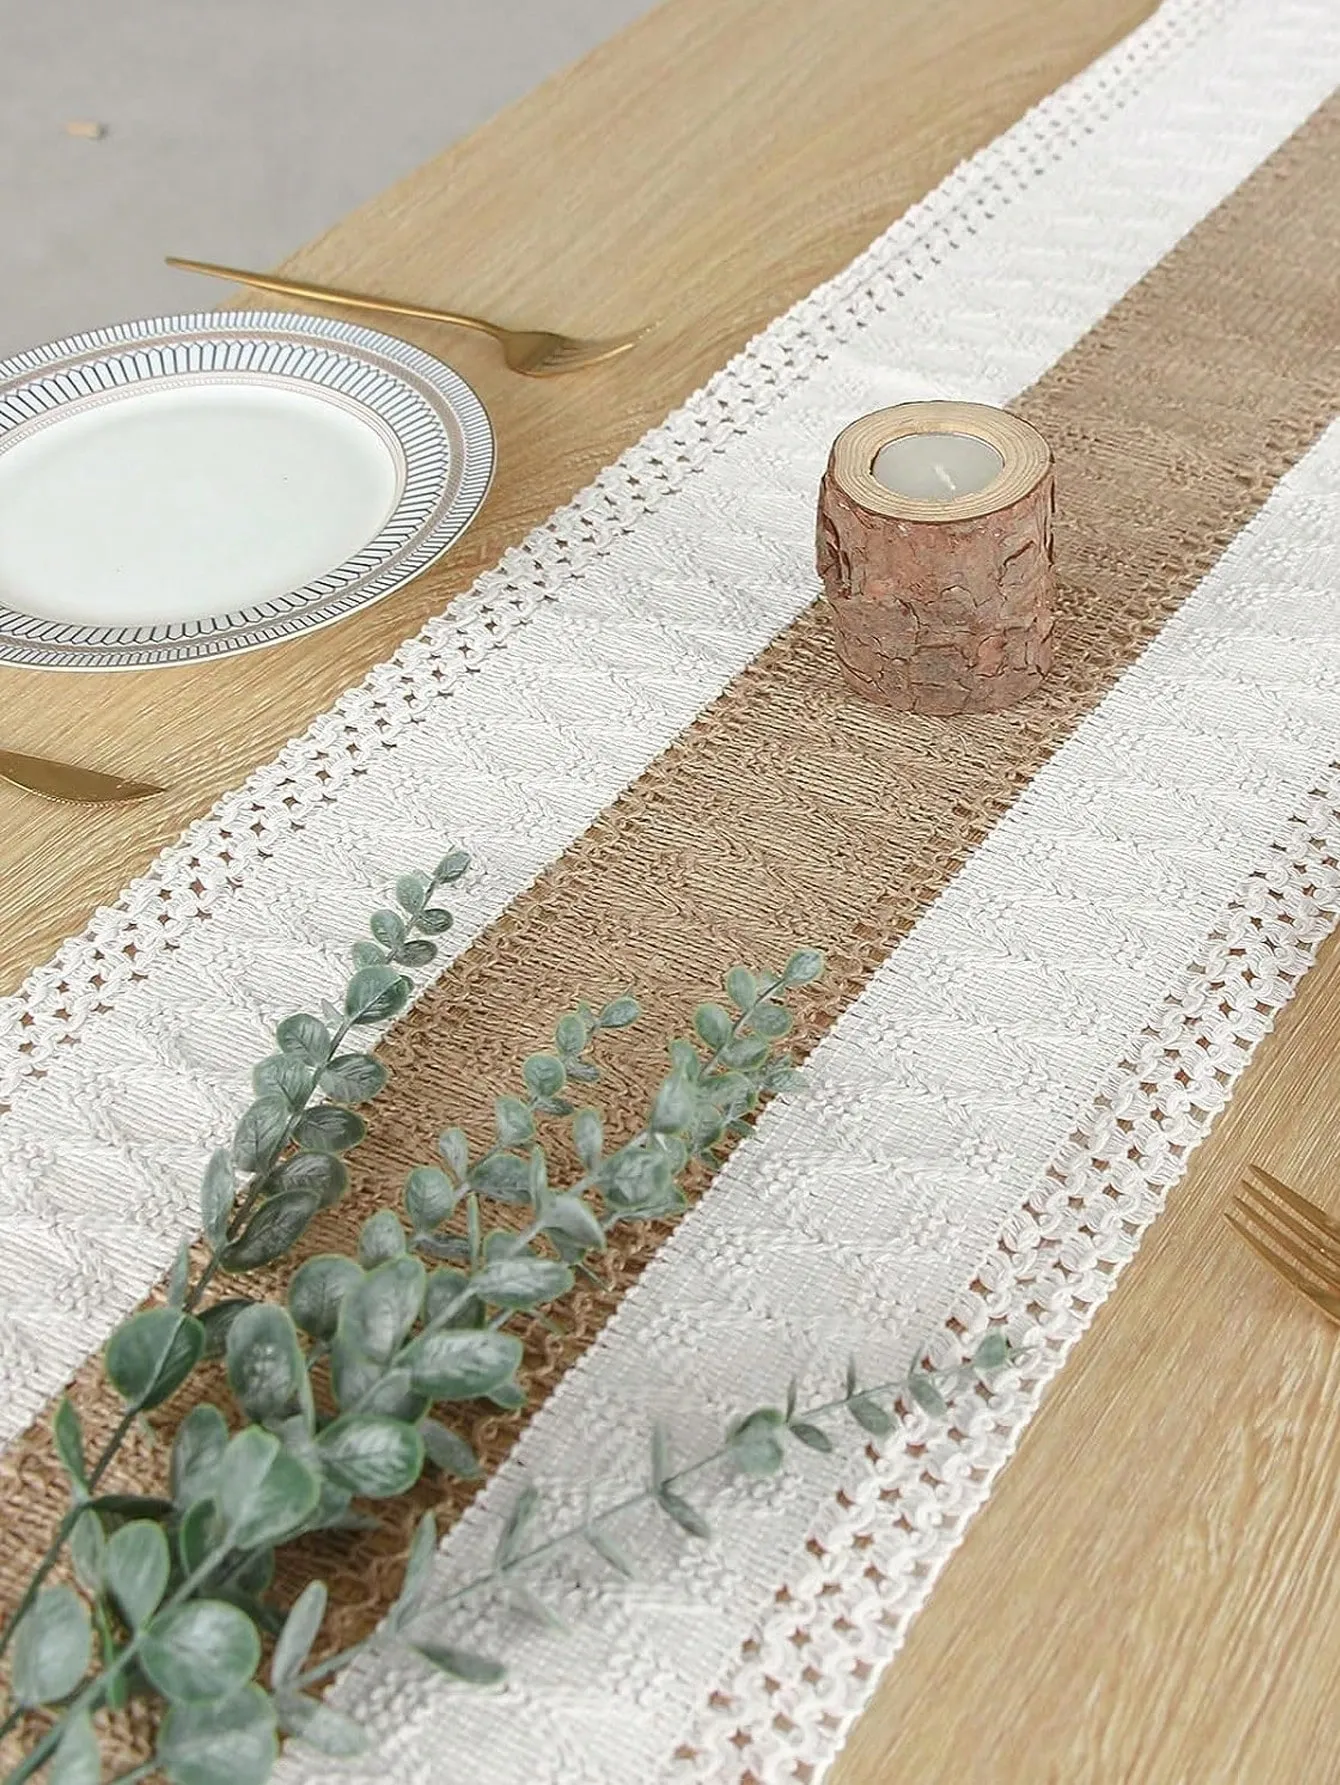 30x180cm再利用可能な自然織りテーブルクロス家の装飾、フェスティバル、ケータリング、特別な機会、クリスマス、家族の集まりに適しています